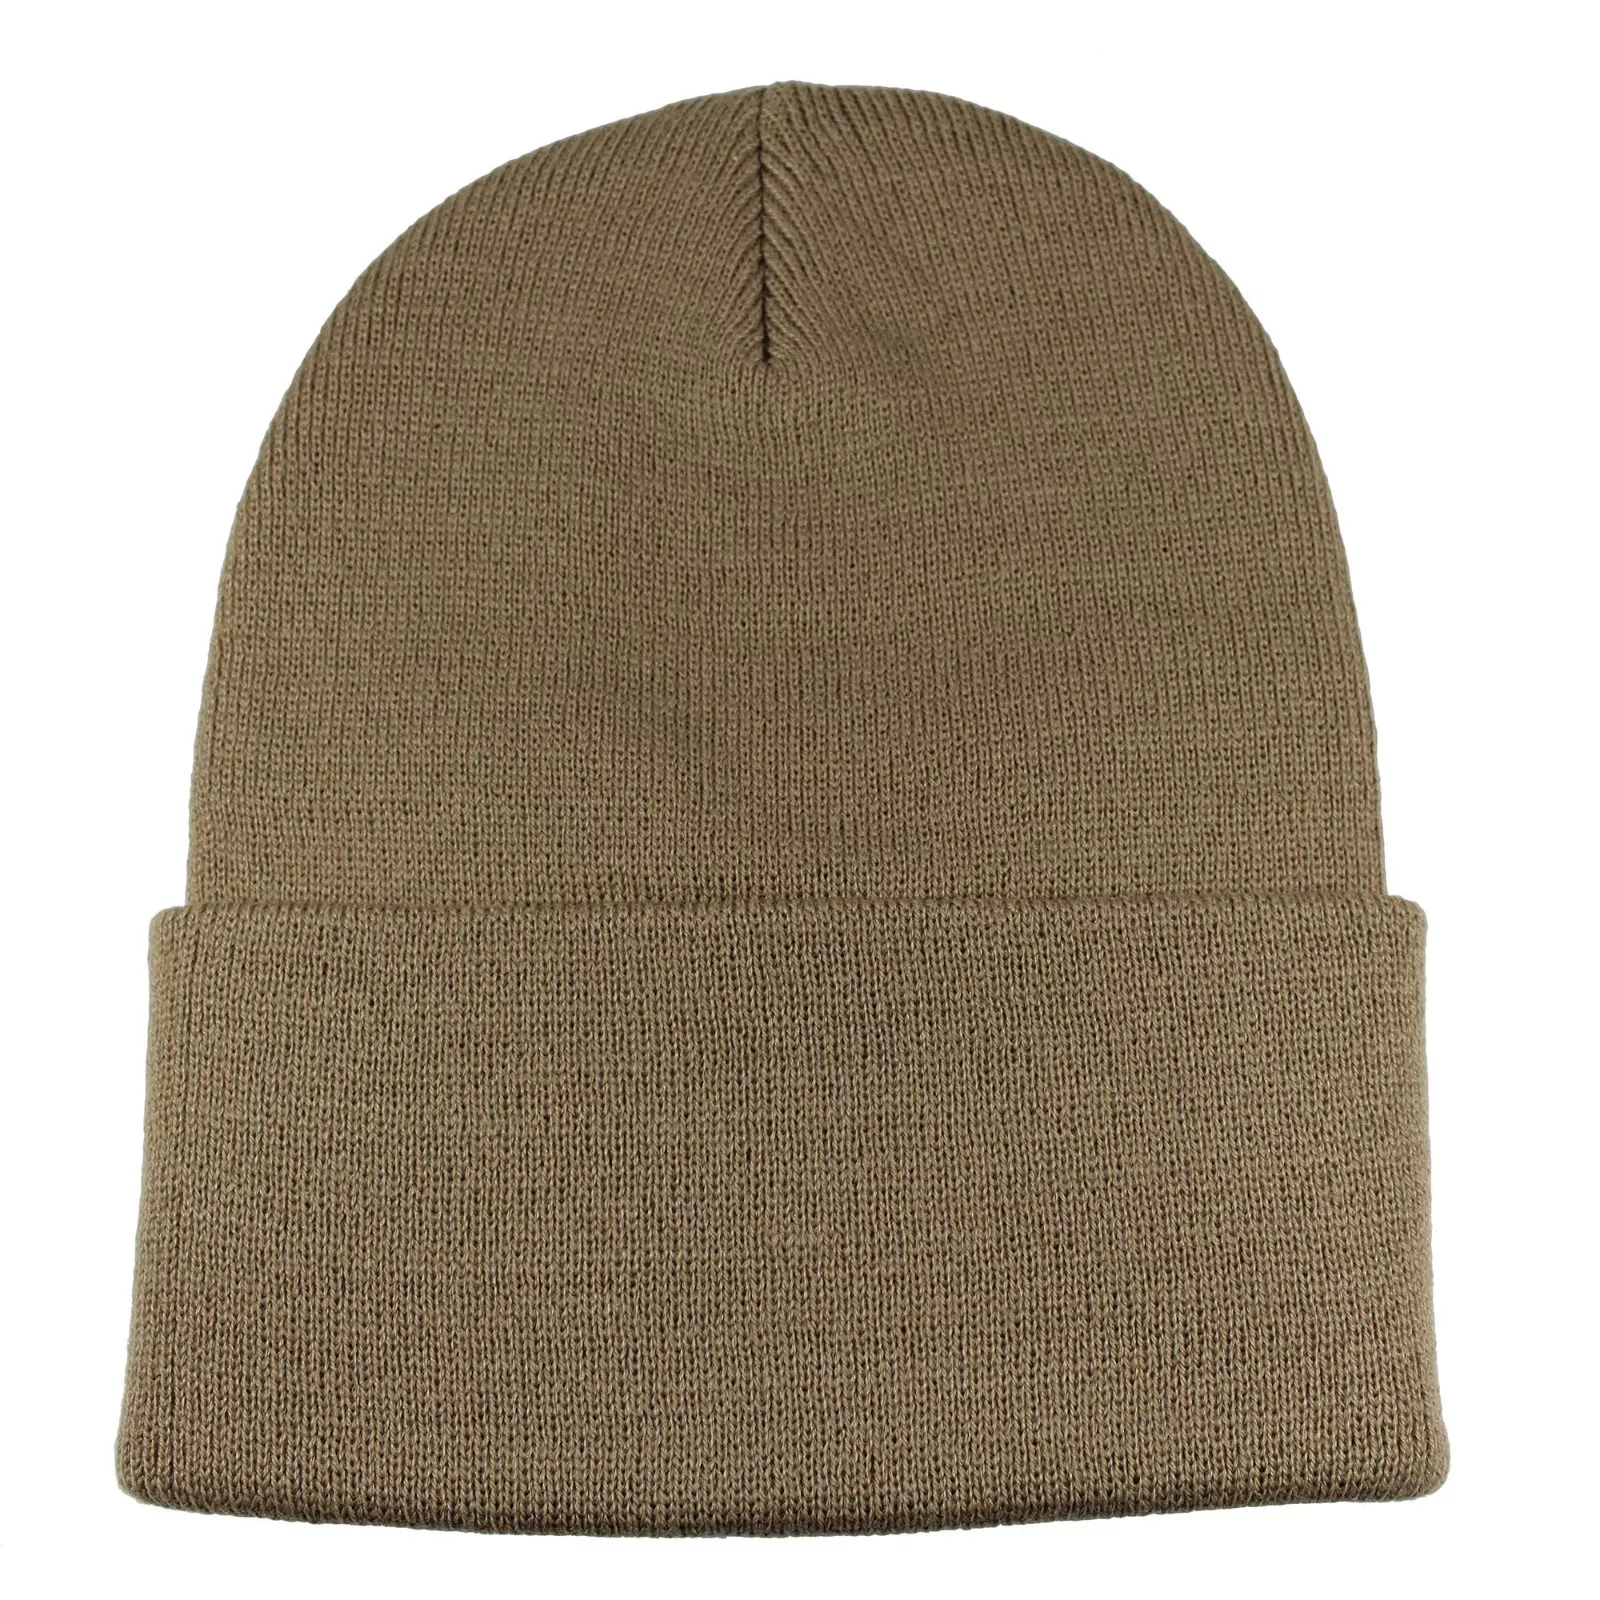 Unisex Plain Warm Knit Beanie Hat Cuff Skull Ski Cap Khaki1pcs - £7.85 GBP